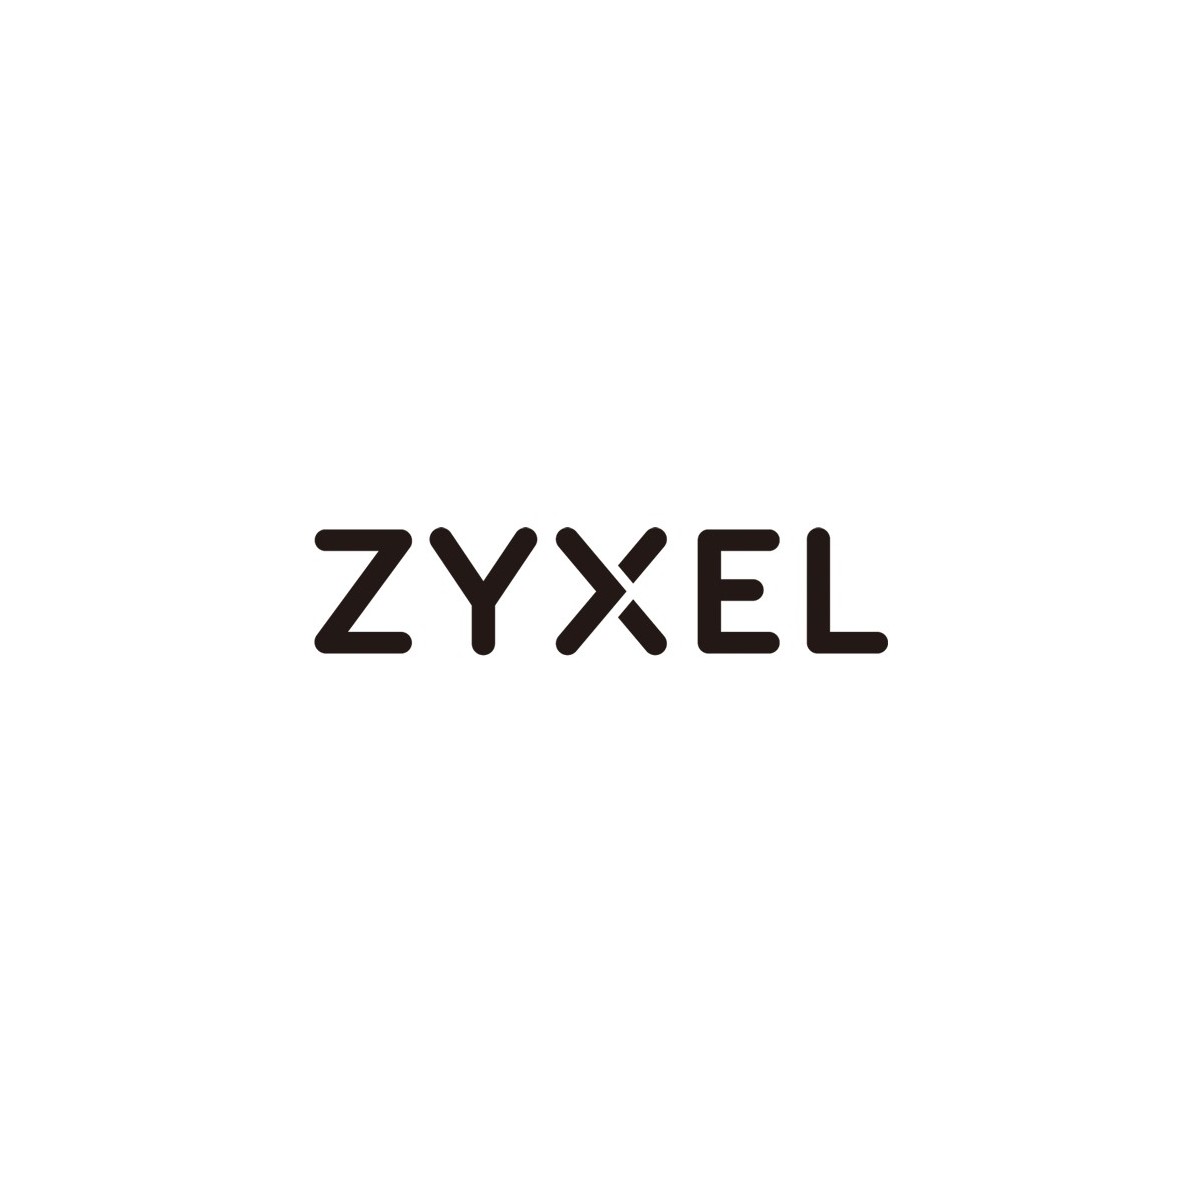 ZyXEL SECUEXTENDER-ZZ1Y10F - 1 license(s) - 1 year(s) - License